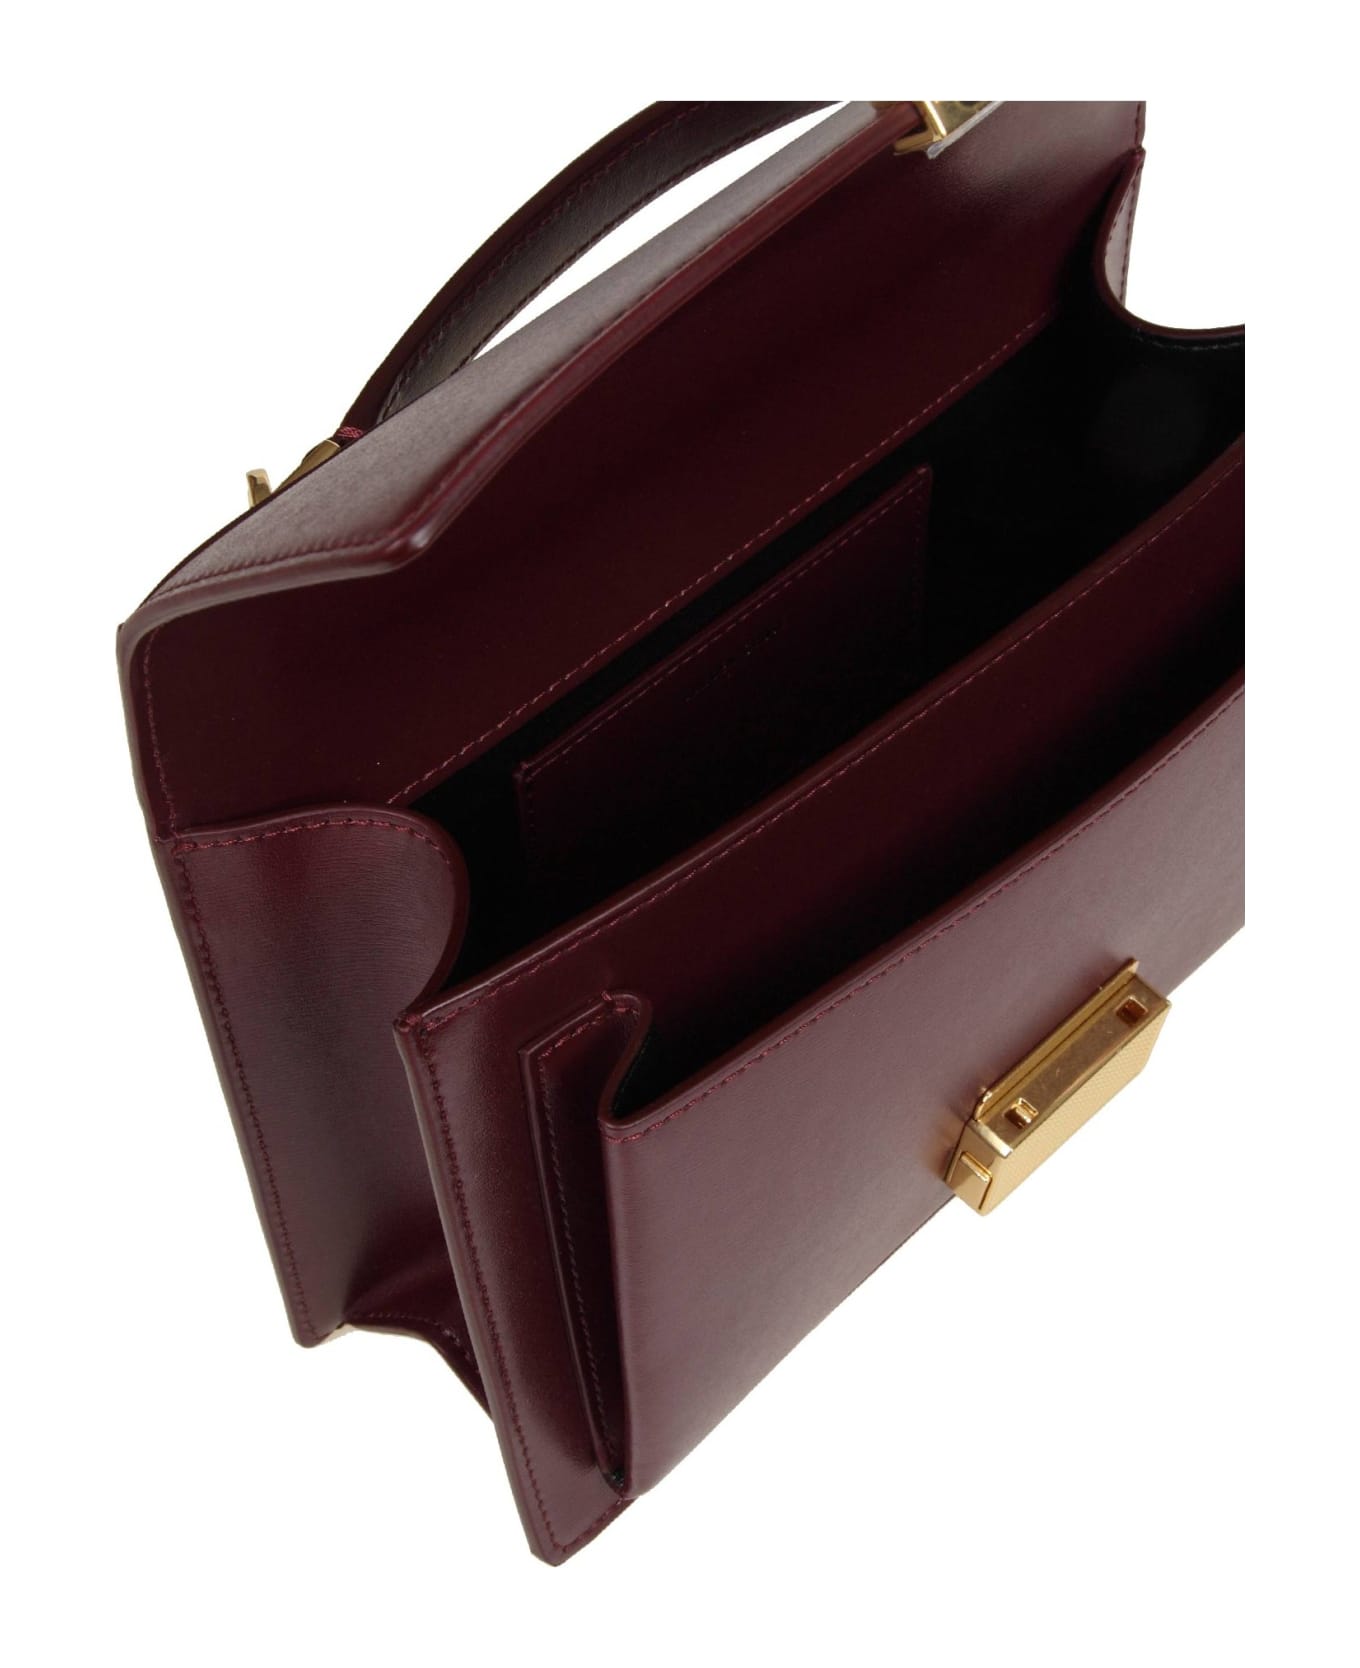 Golden Goose Venezia Handbag In Bordeaux Leather - Burgundy